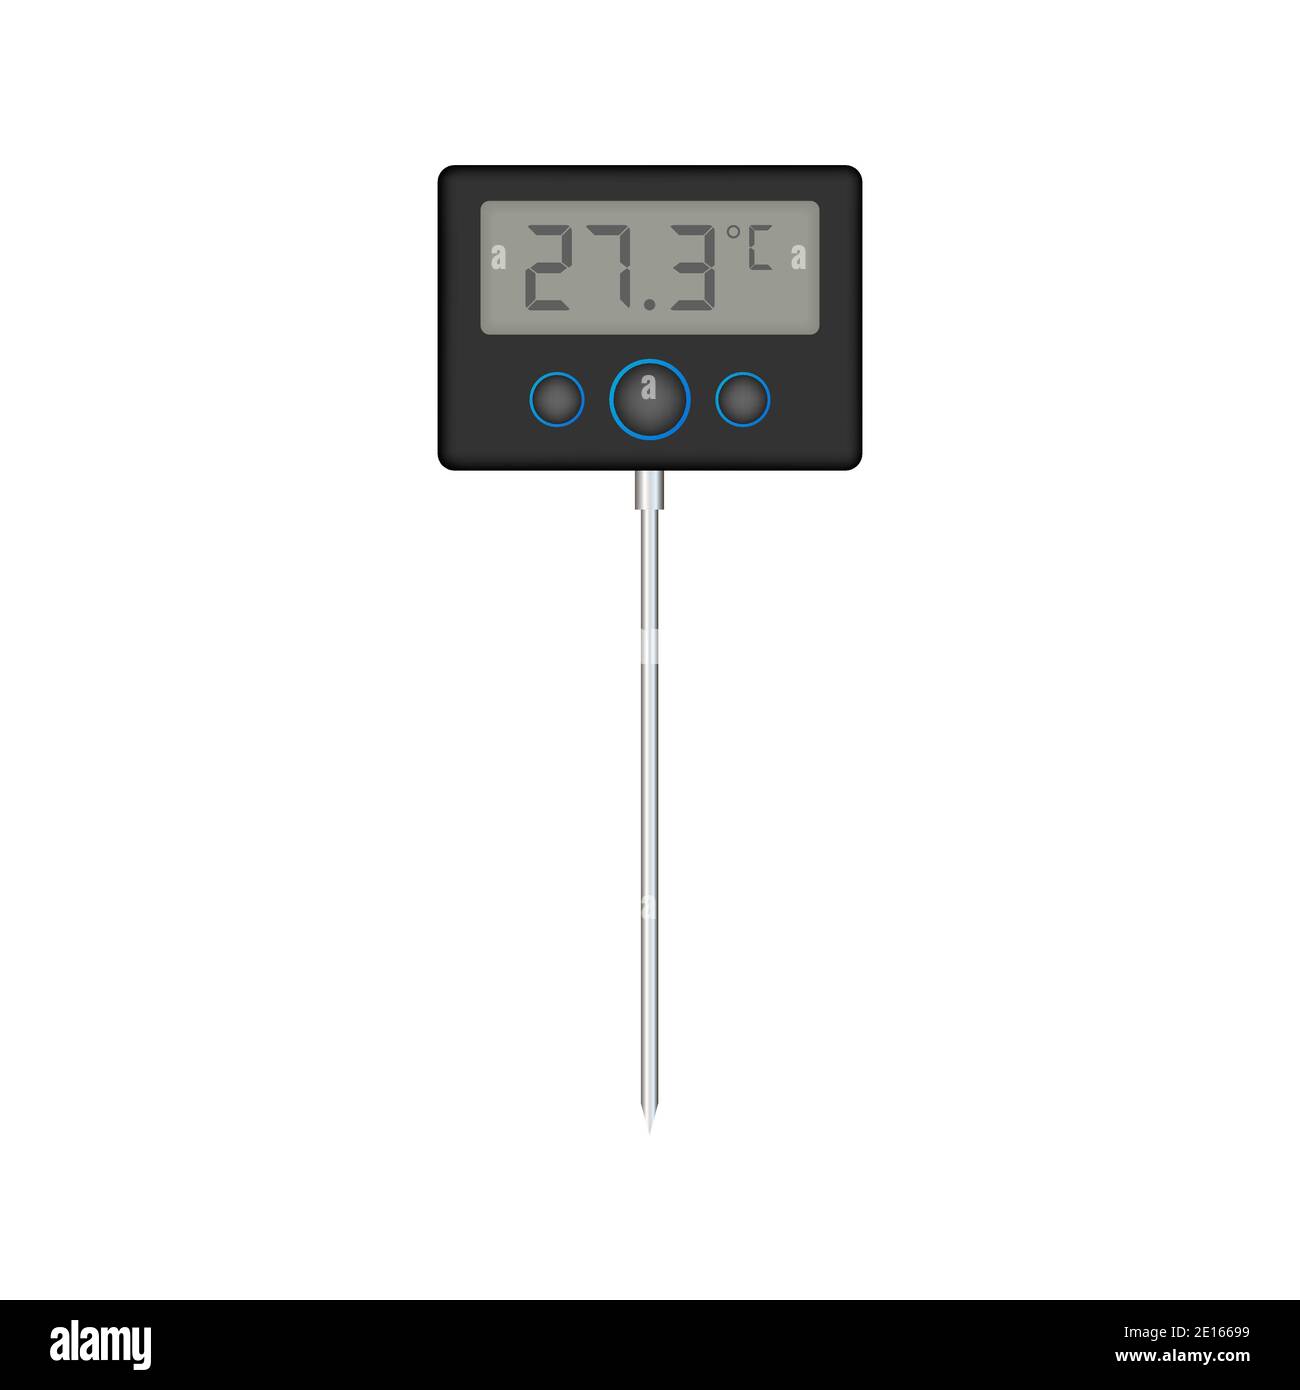 https://c8.alamy.com/comp/2E16699/kitchen-or-laboratory-thermometer-food-temperature-vector-stock-illustration-2E16699.jpg